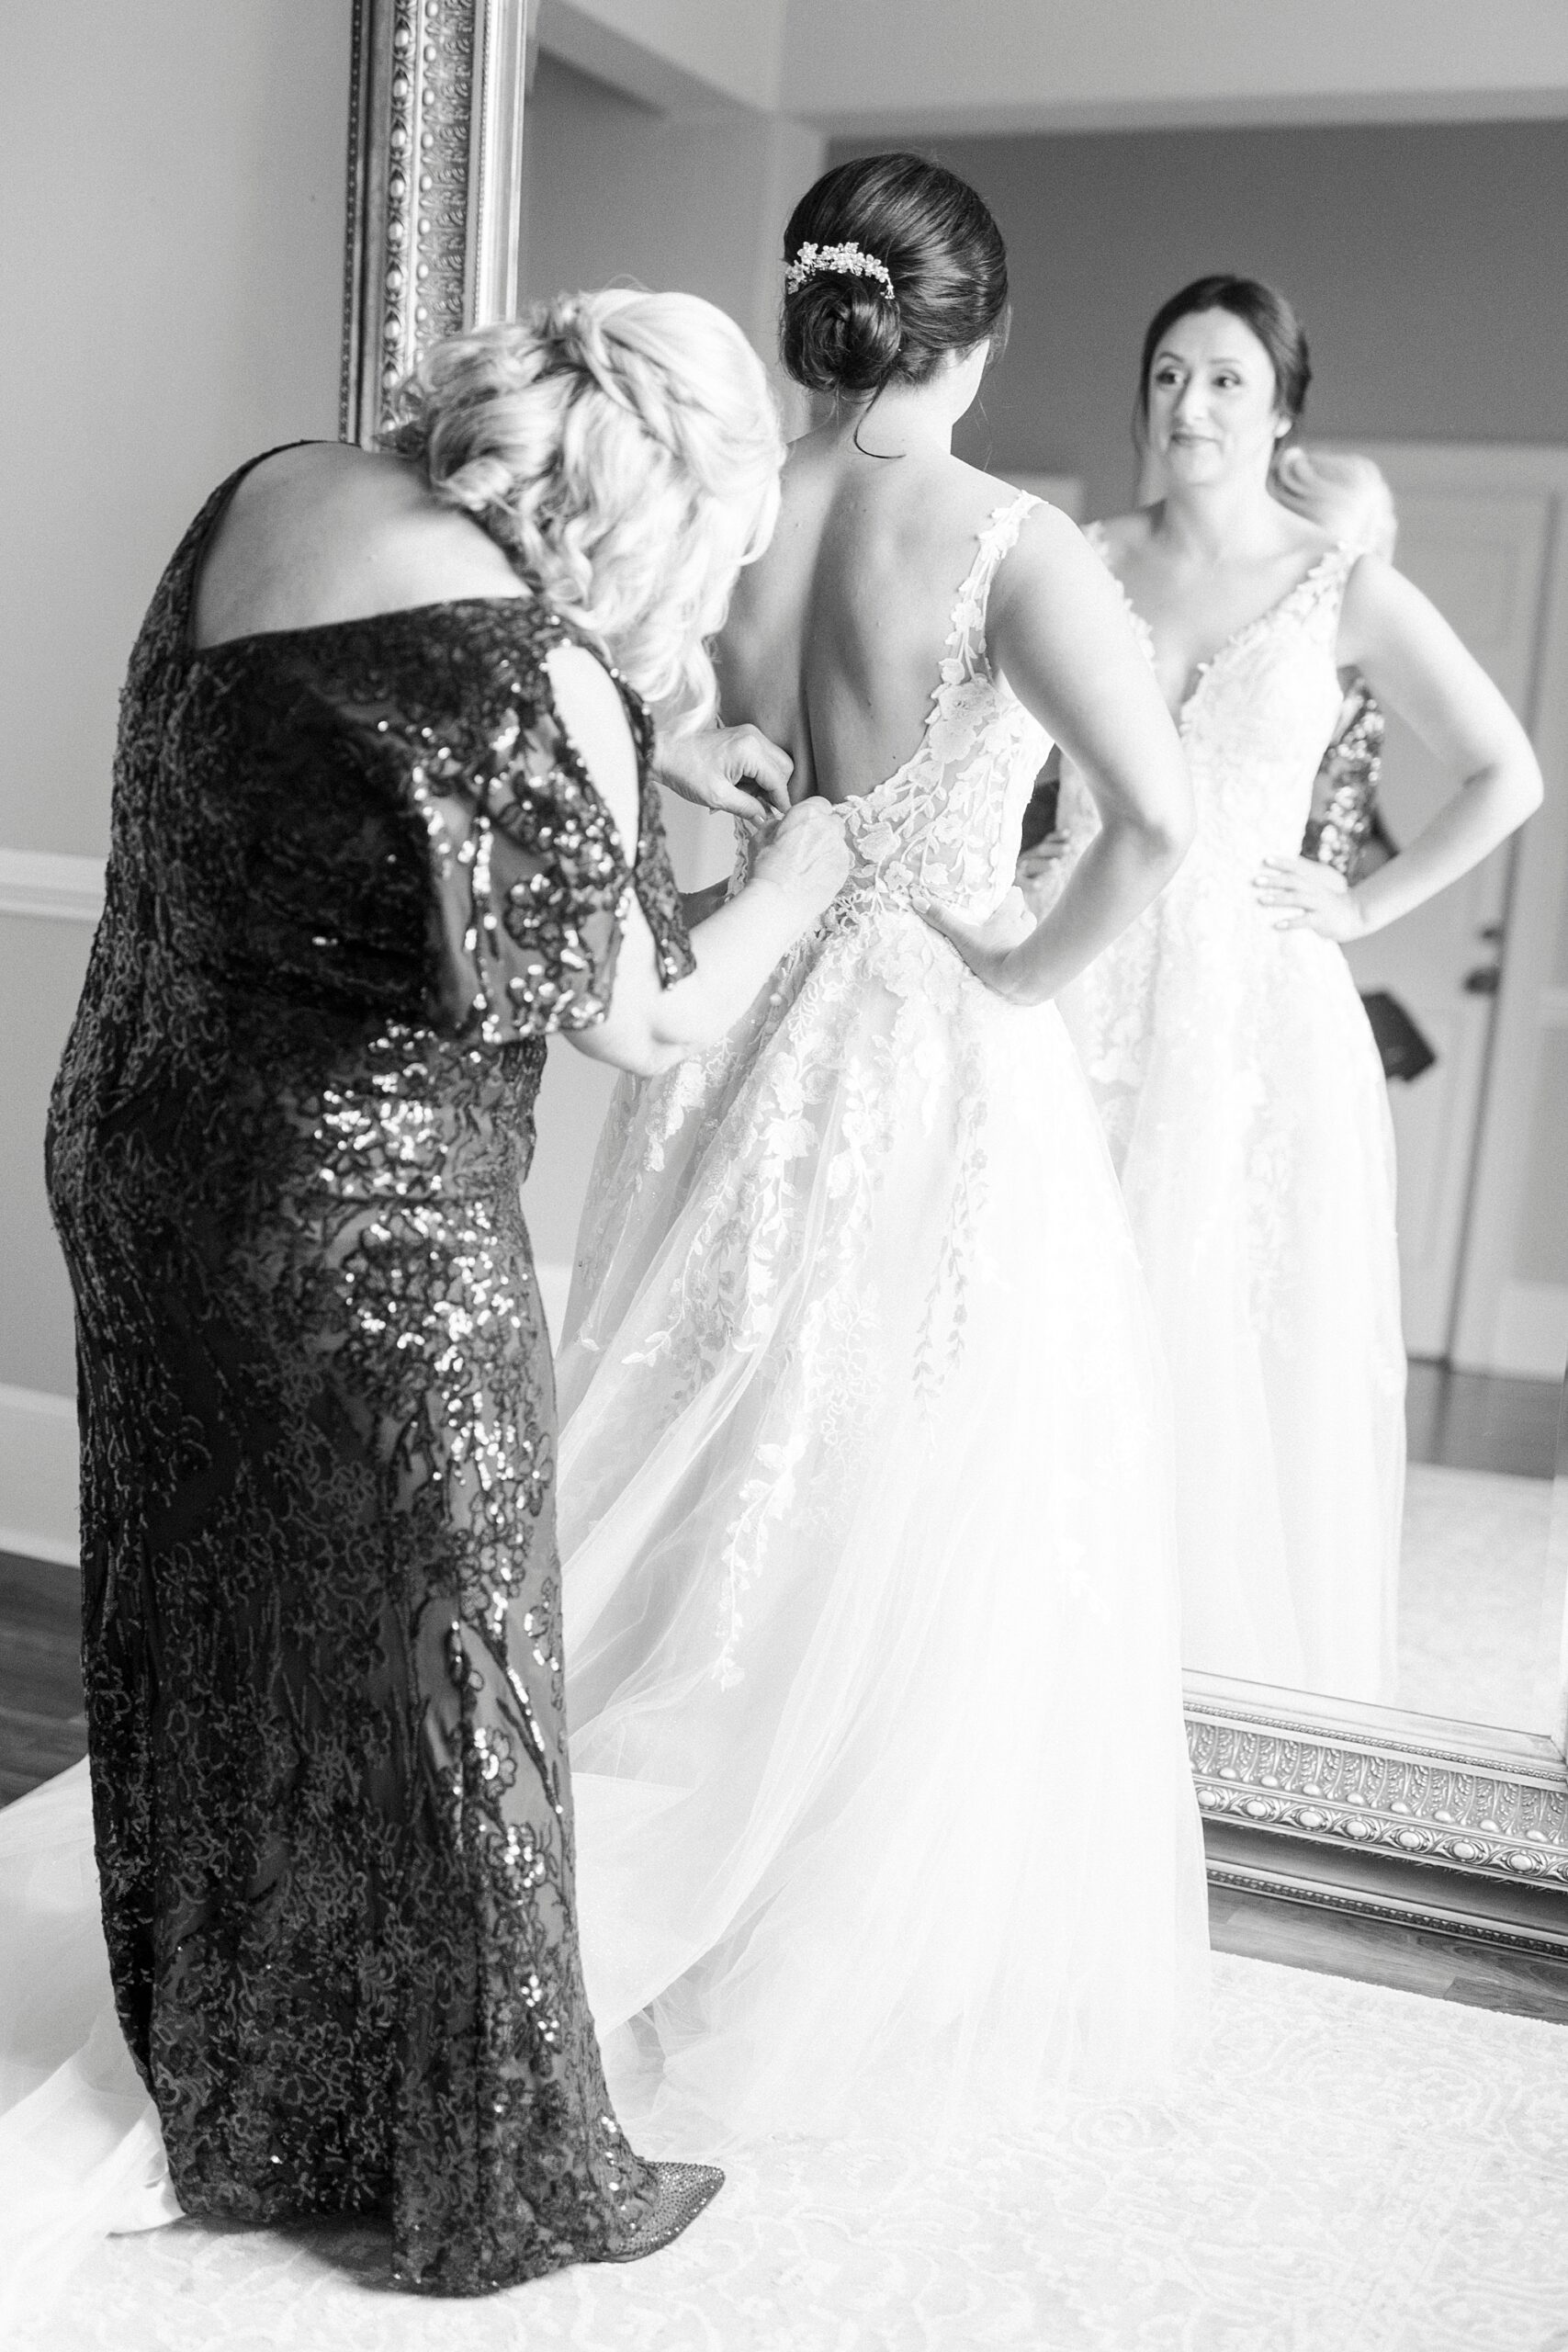 mother helps bride into wedding dress during prep at Separk Mansion